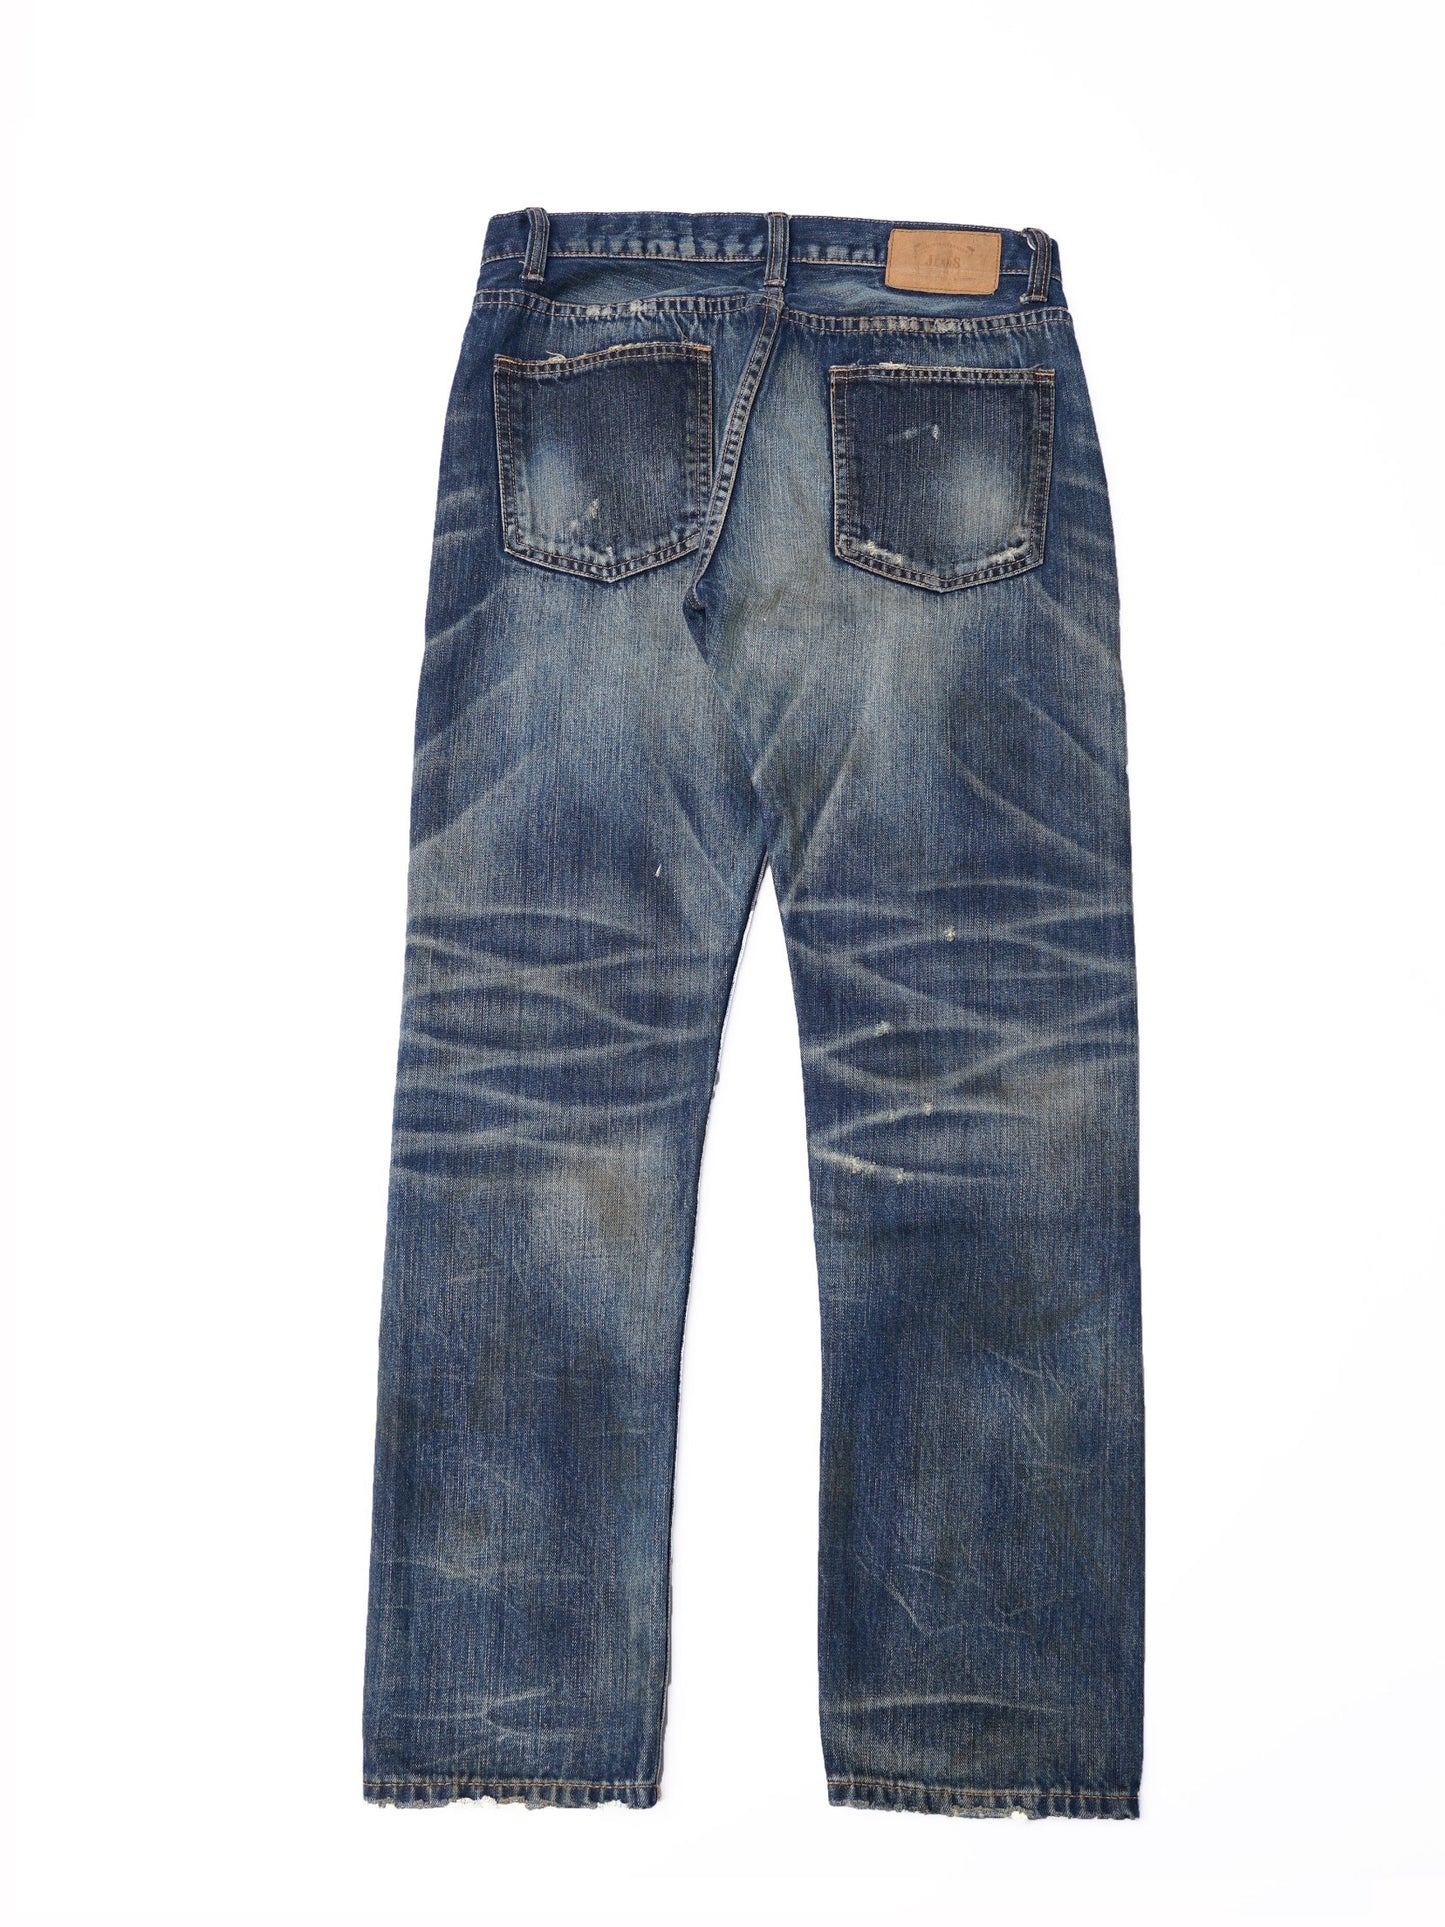 【訂製】C02 14oz. Dirty Damaged Slim Cut Jeans